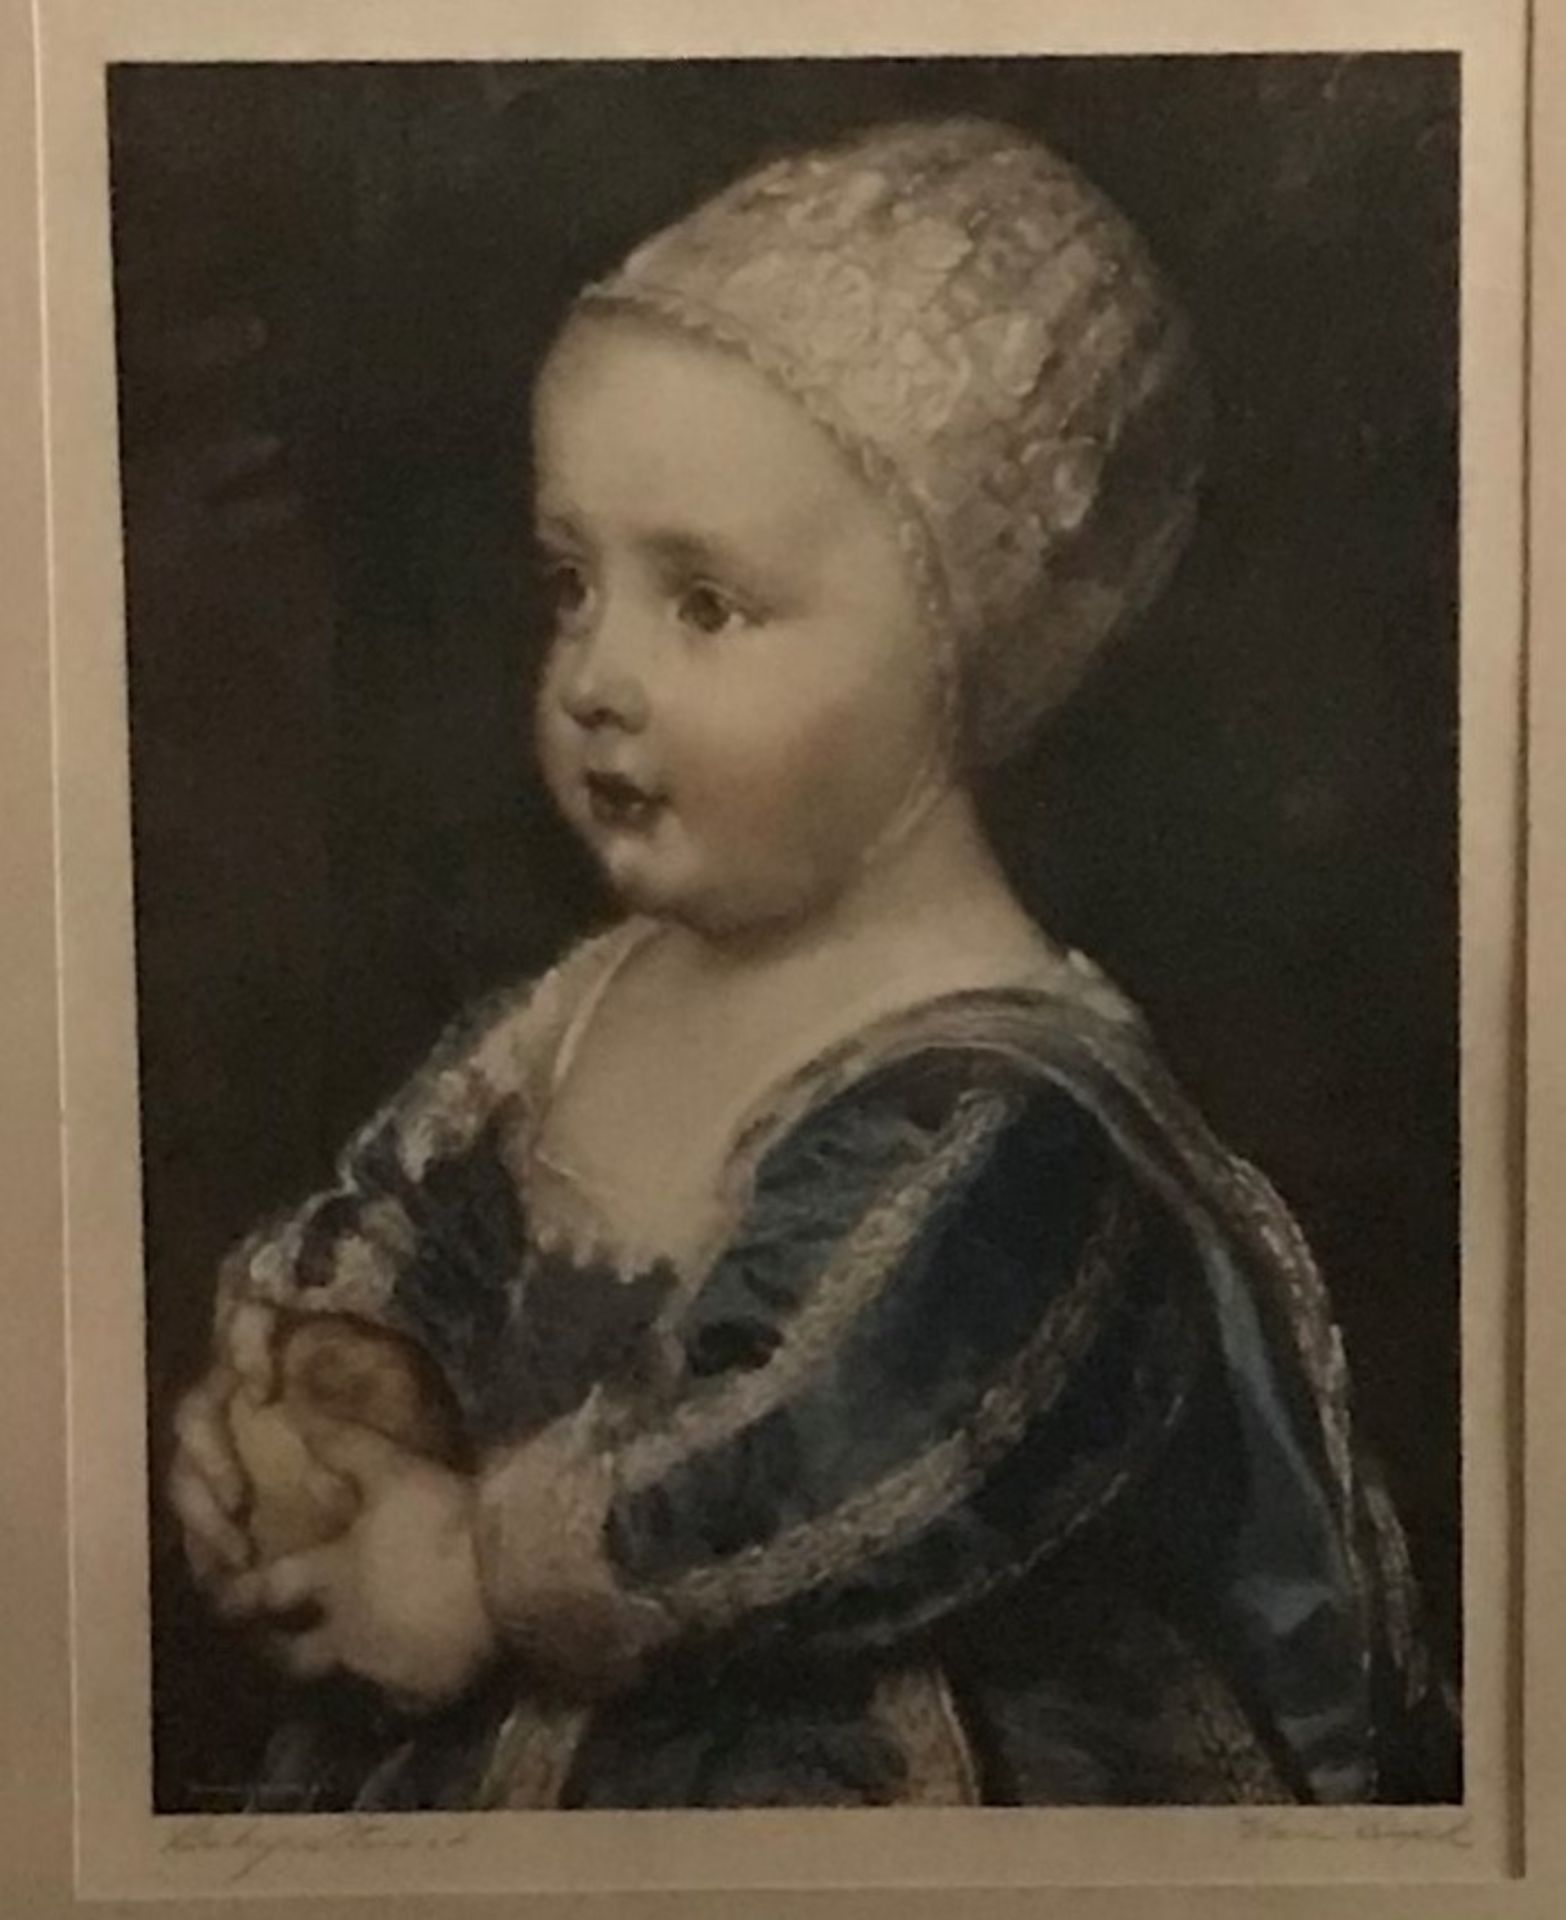 Van Dyck Engraving Signed in pencil "Baby Stuart"